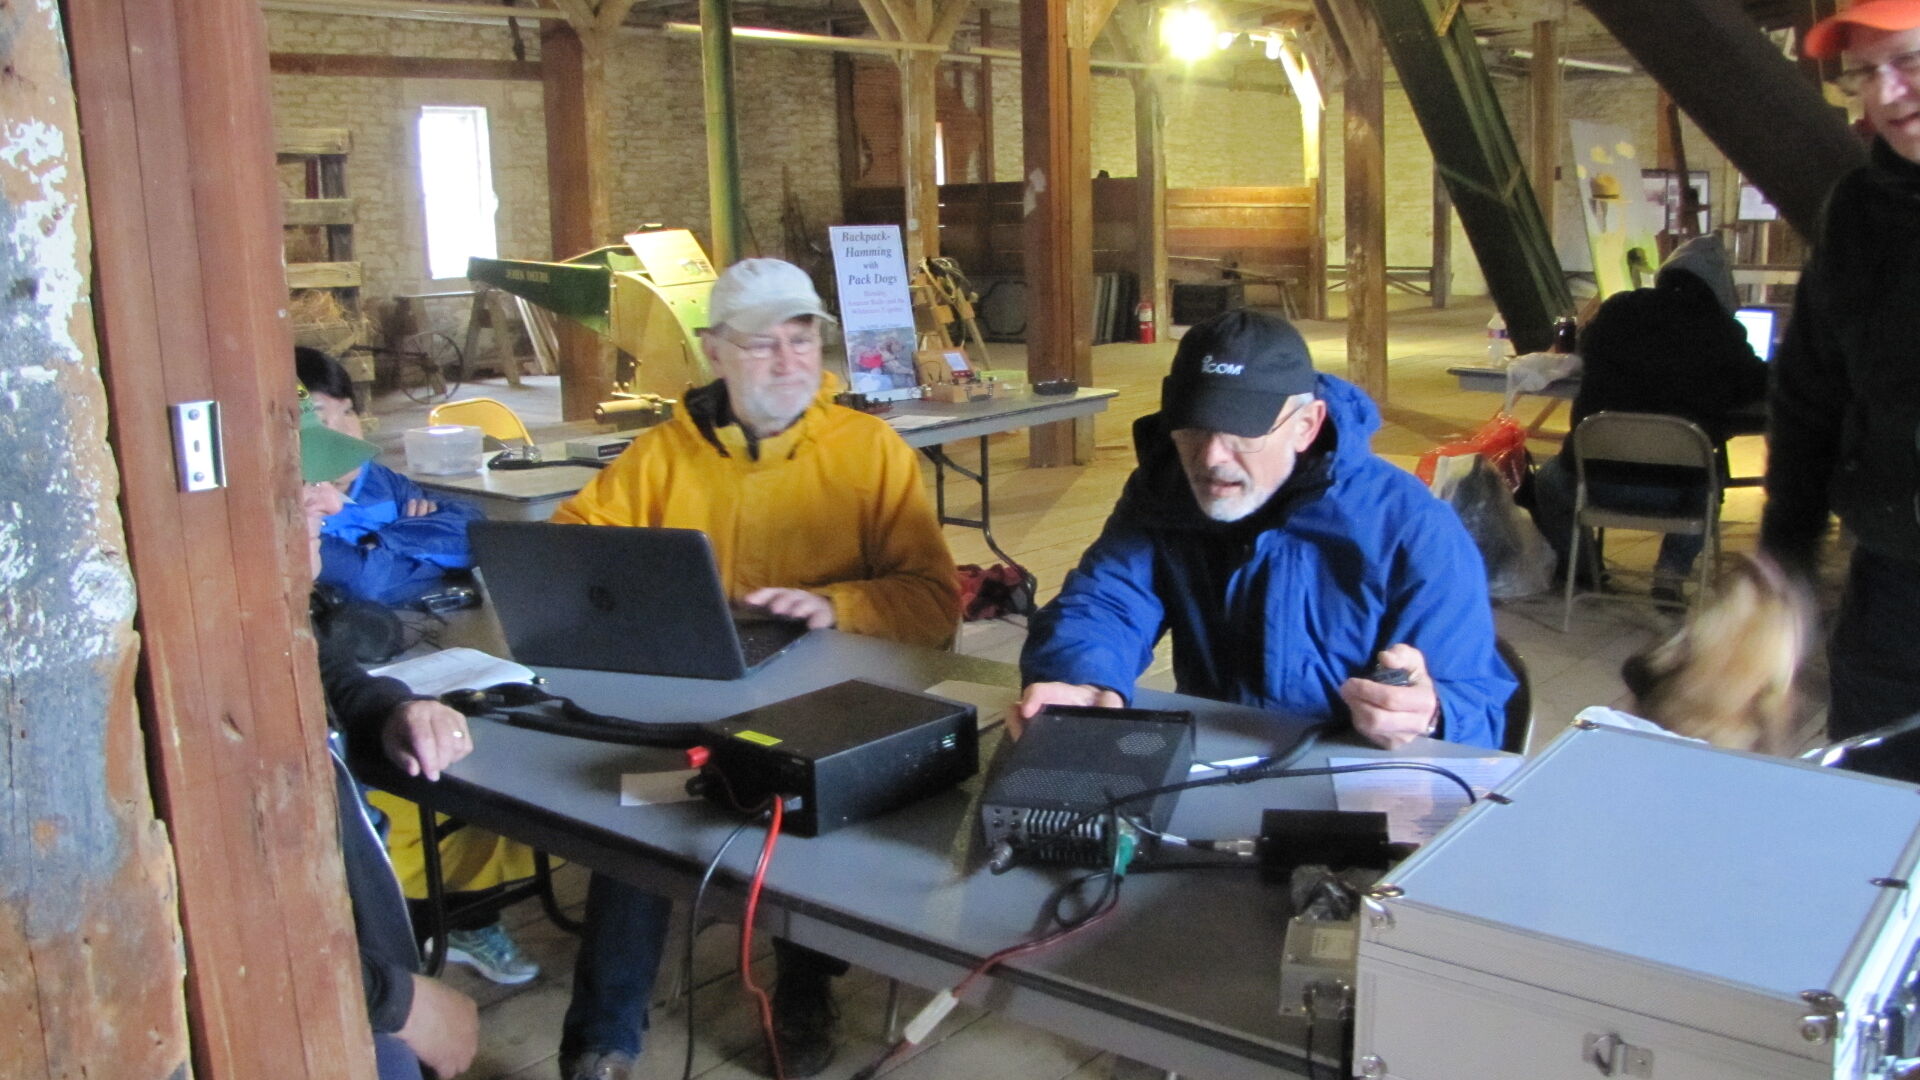 Amateur Radio Event at Tallgrass Prairie National Preserve Free emporiagazette